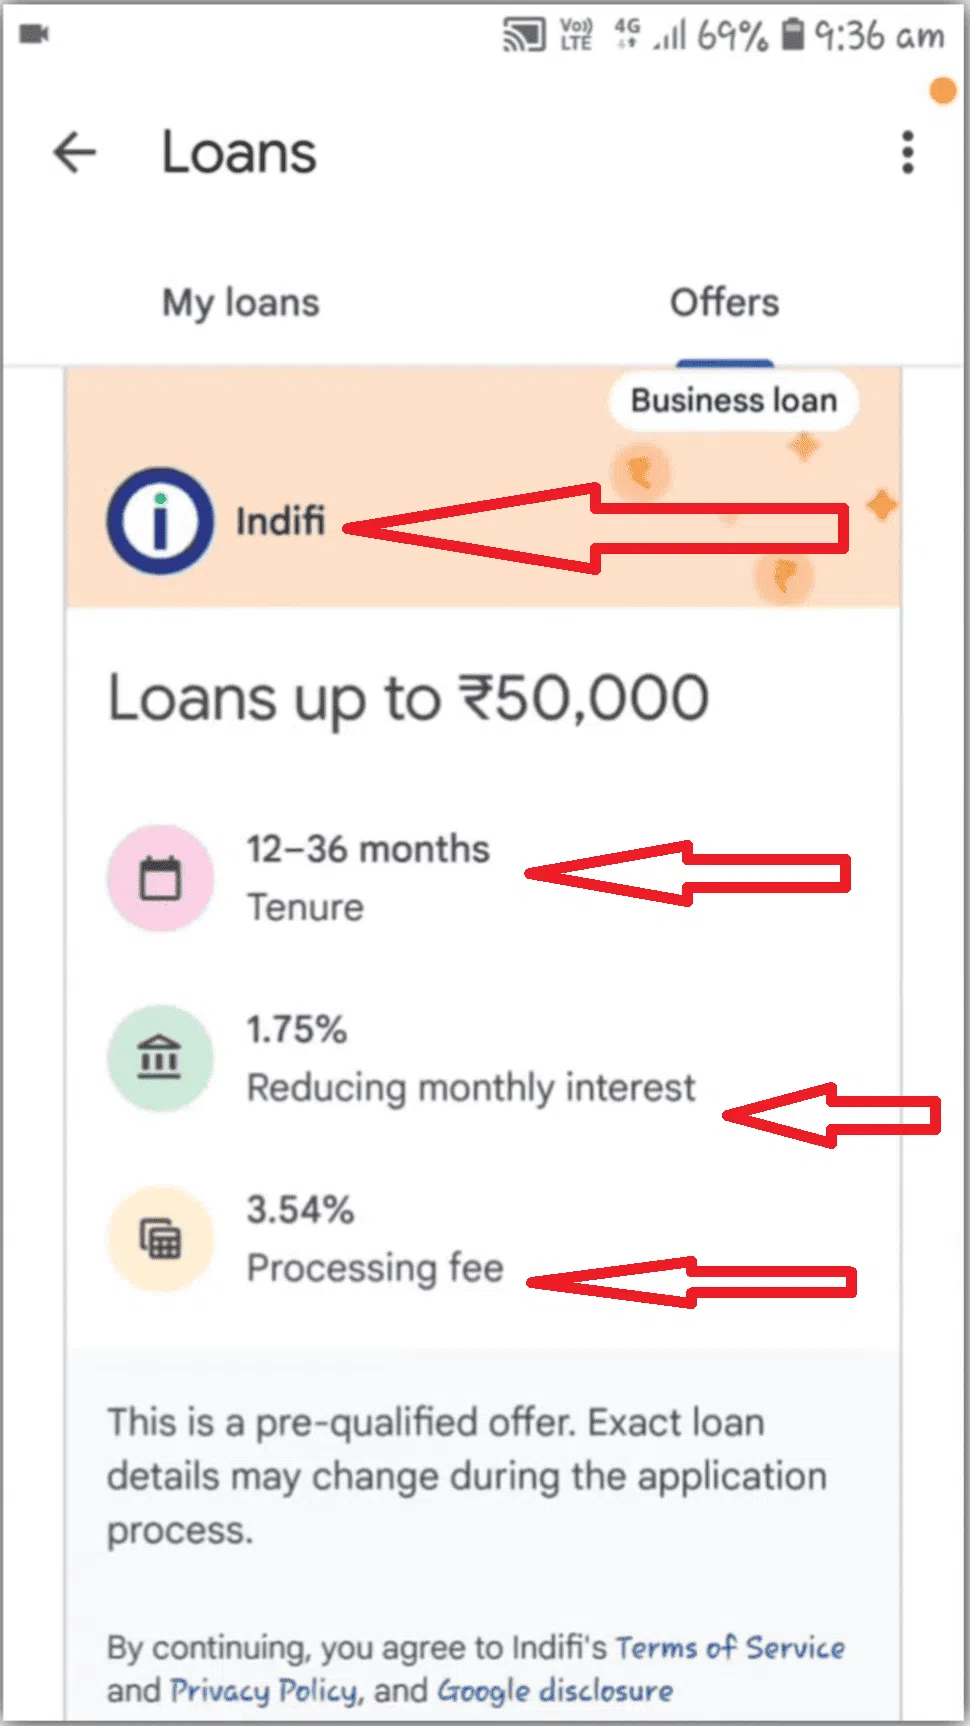 4 now choose Loan lending partener